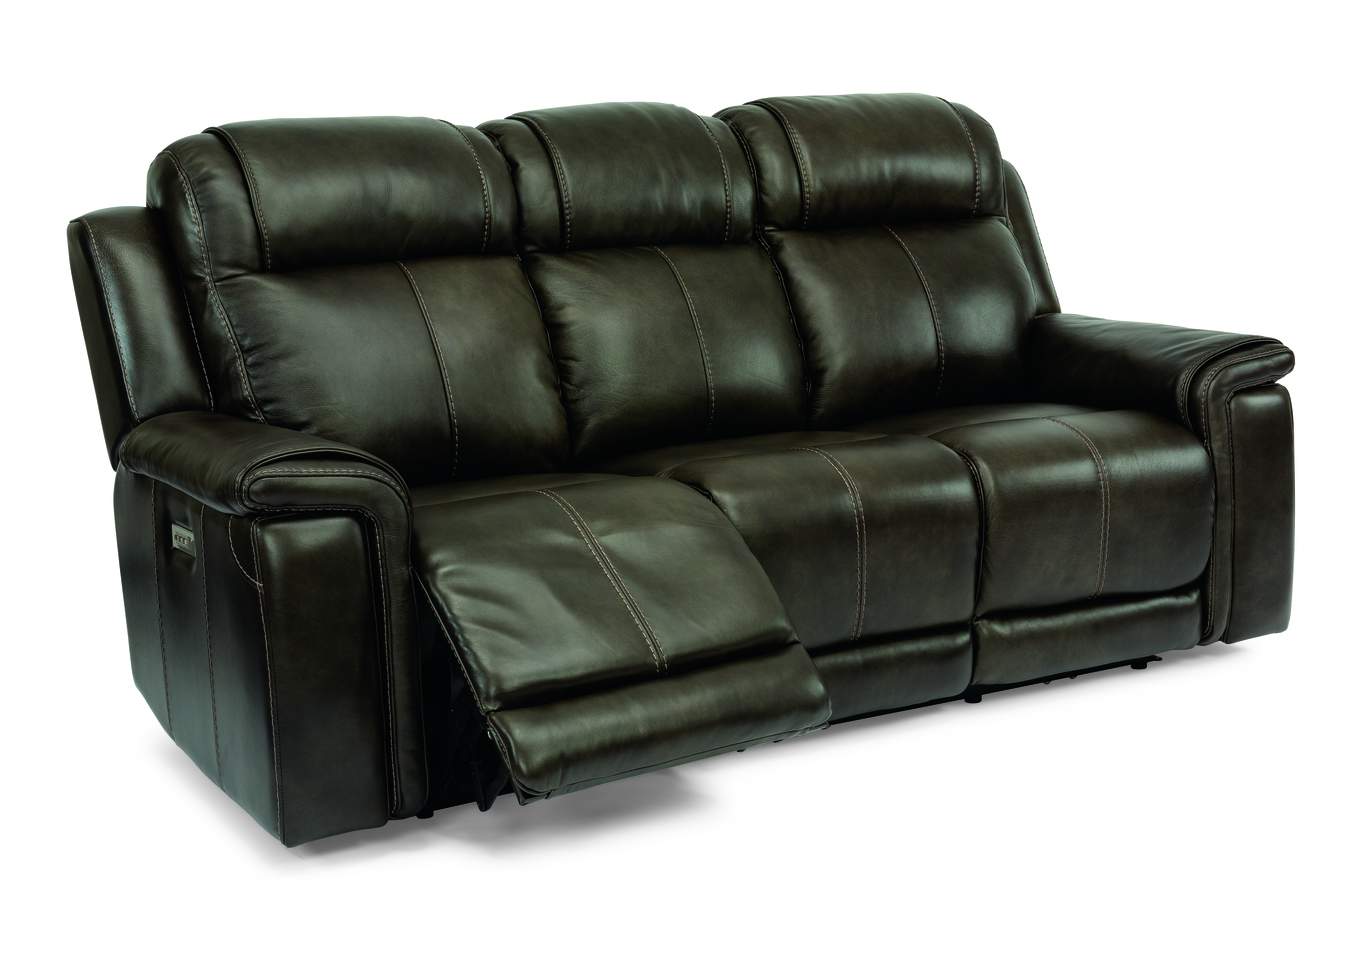 Kingsley Dark Brown Power Reclining Sofa with Power Headrests,Flexsteel